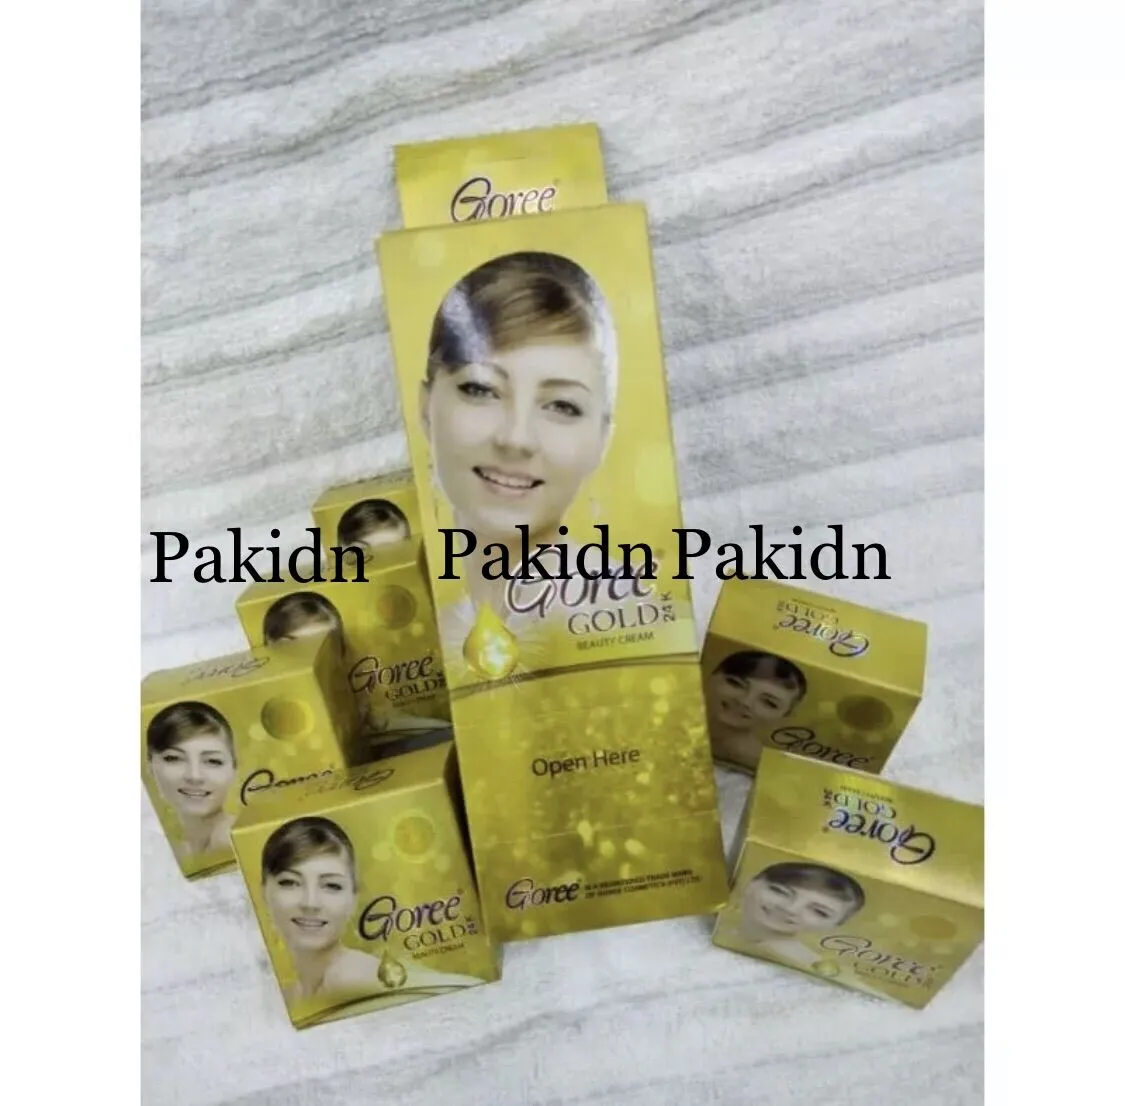 GOREE GOLD BEAUTY CREAM PAKISTAN Ori 100% | Lazada Indonesia